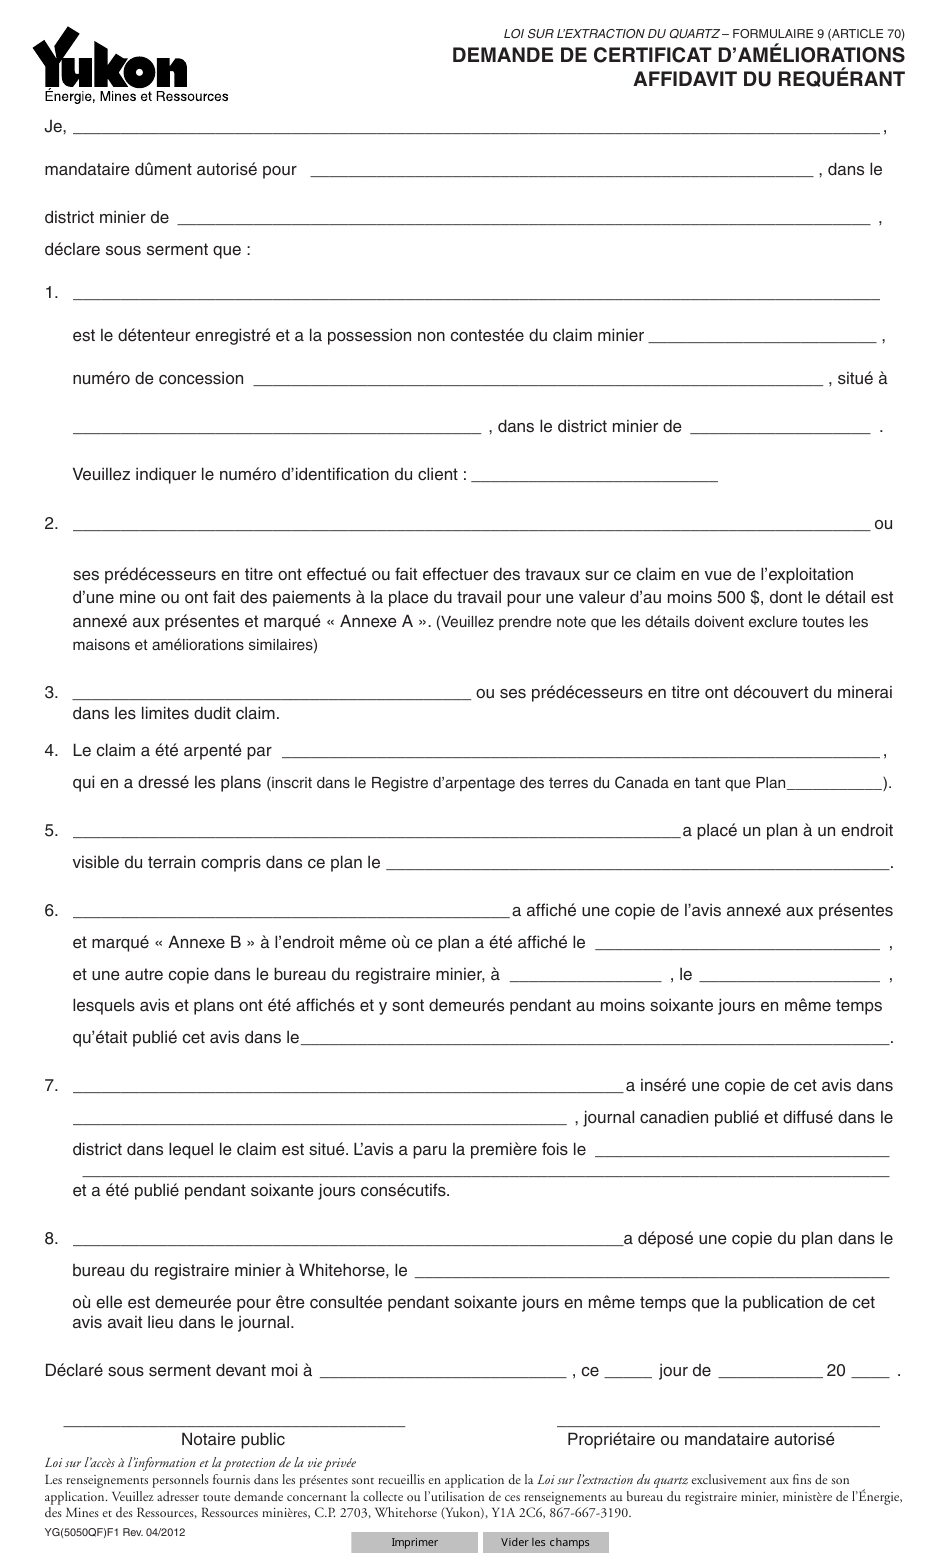 Forme 9 (YG5050) Demande De Certificat Dameliorations Affidavit Du Requerant - Yukon, Canada (French), Page 1